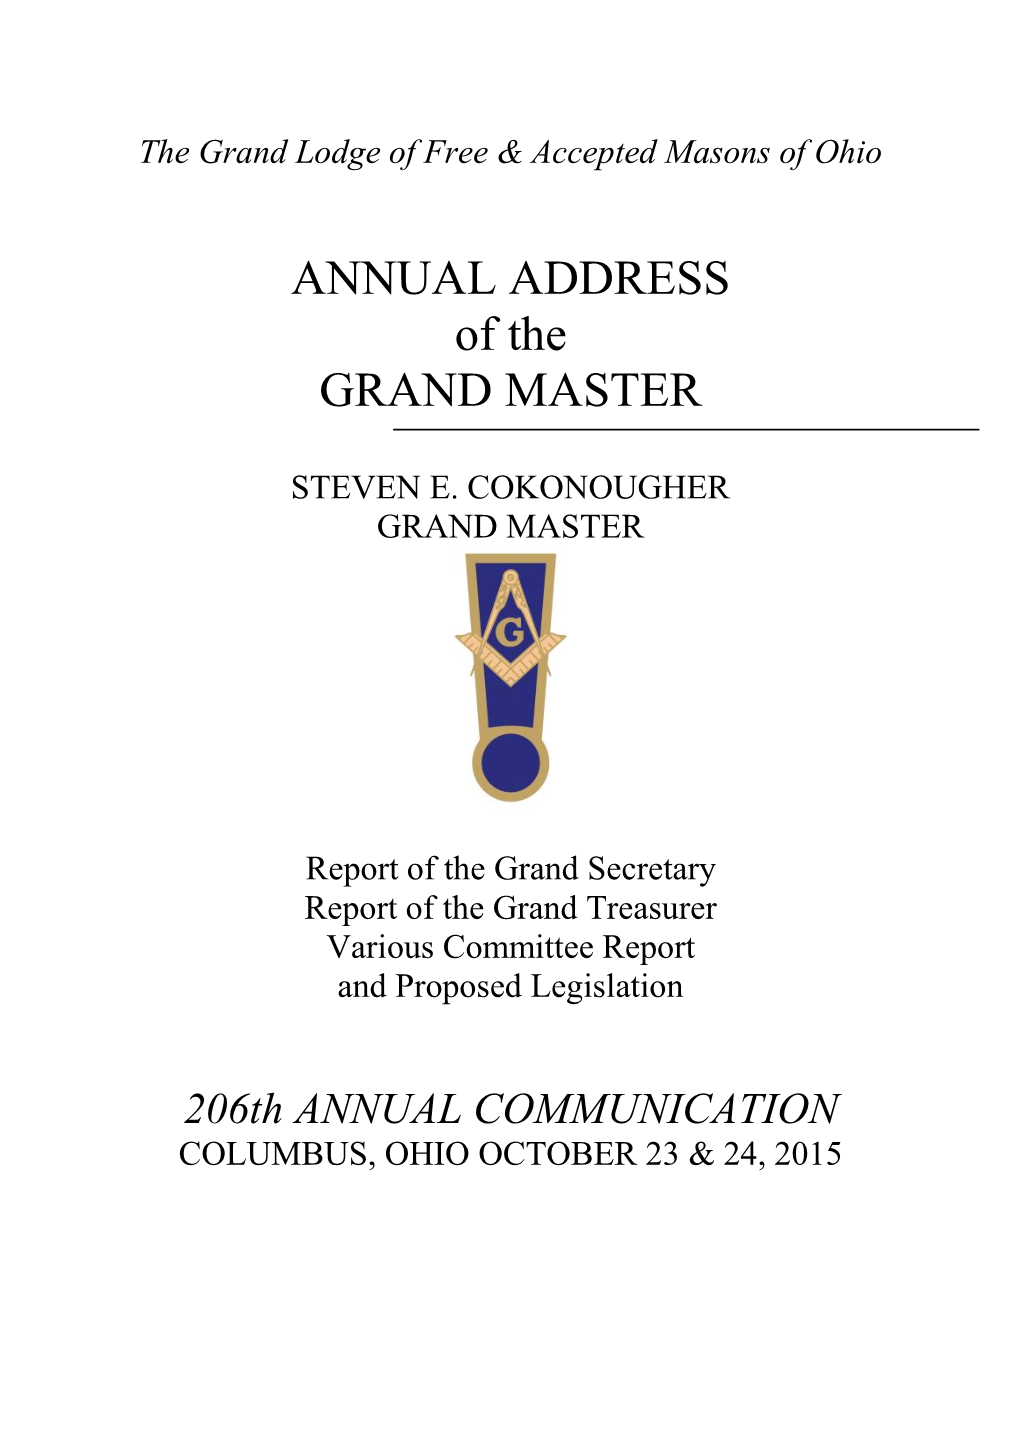 Deputy Grand Master's Annual Report